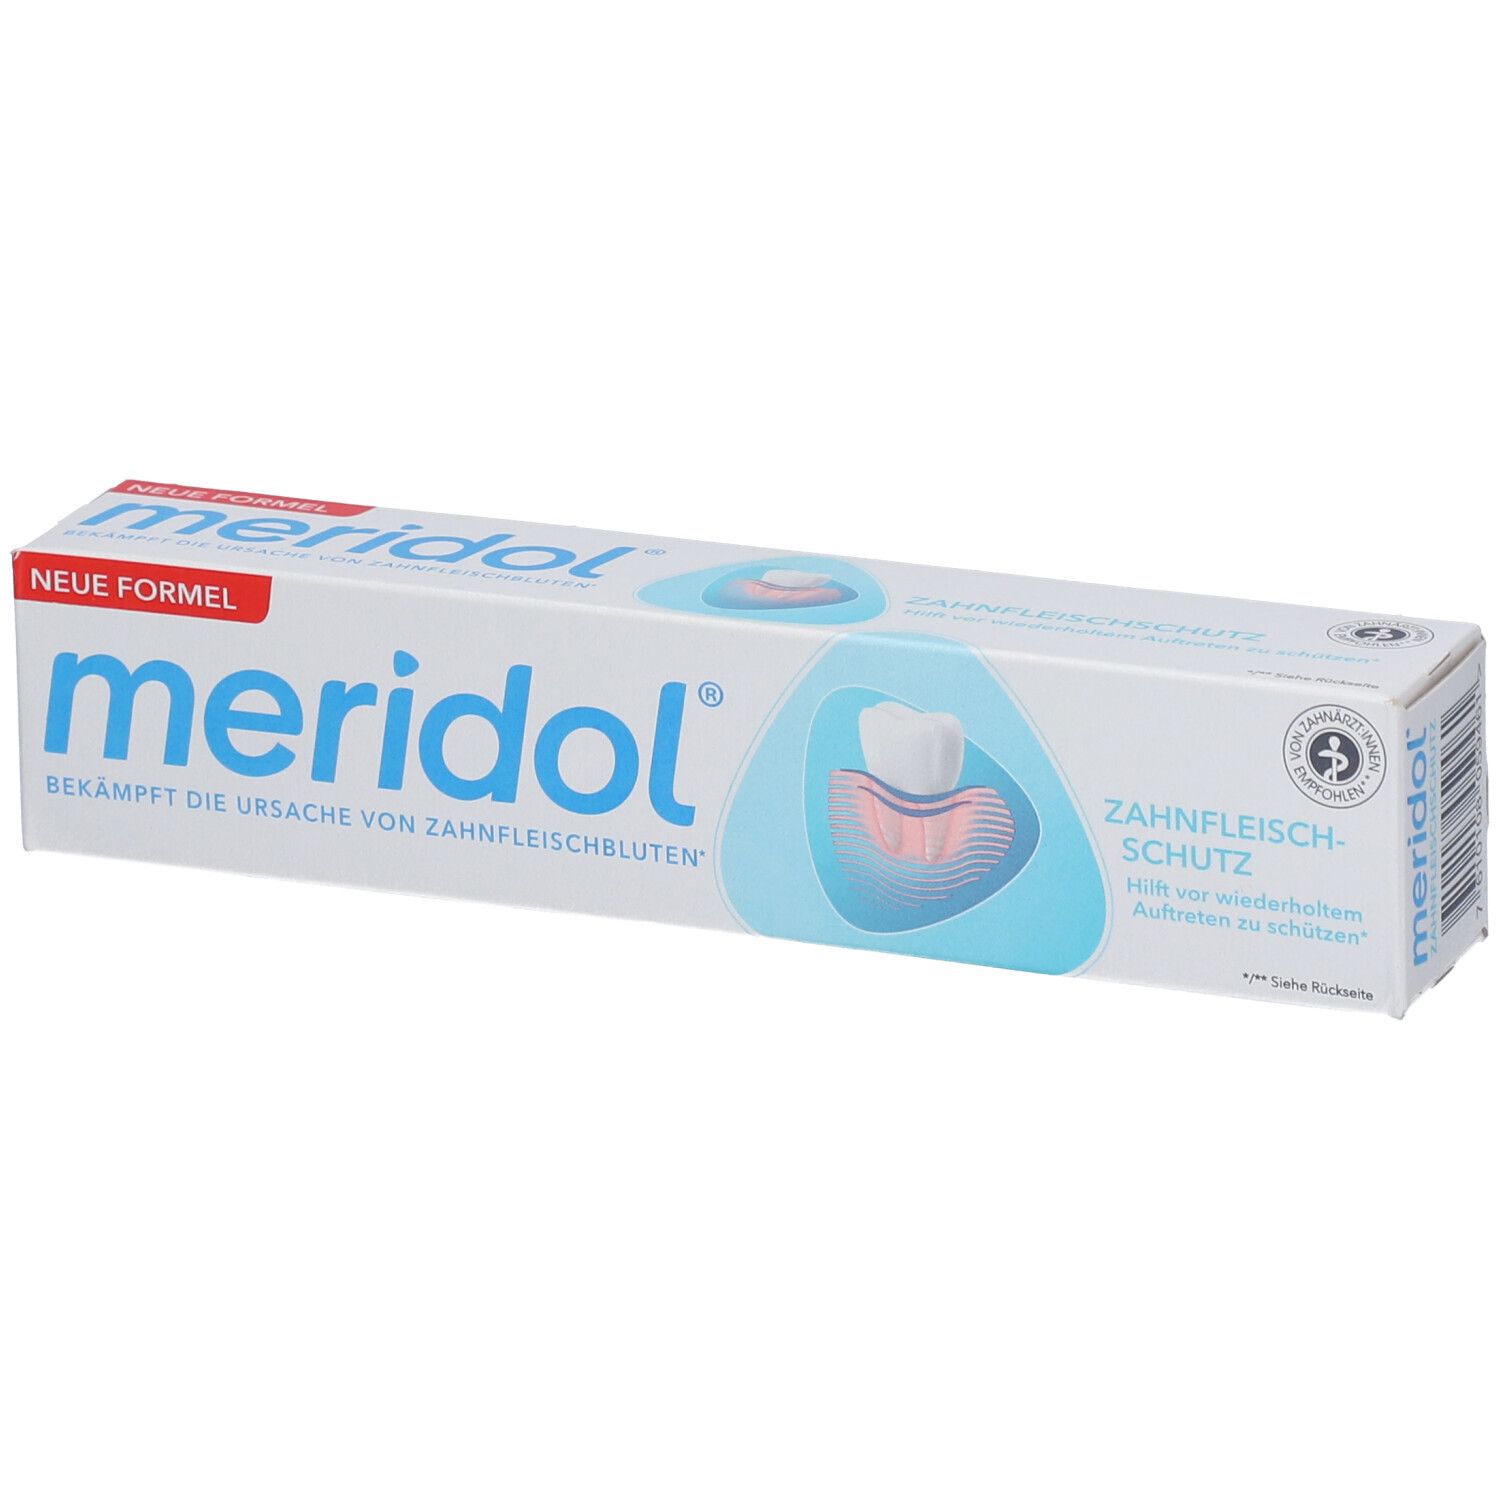 meridol® Dentifrice